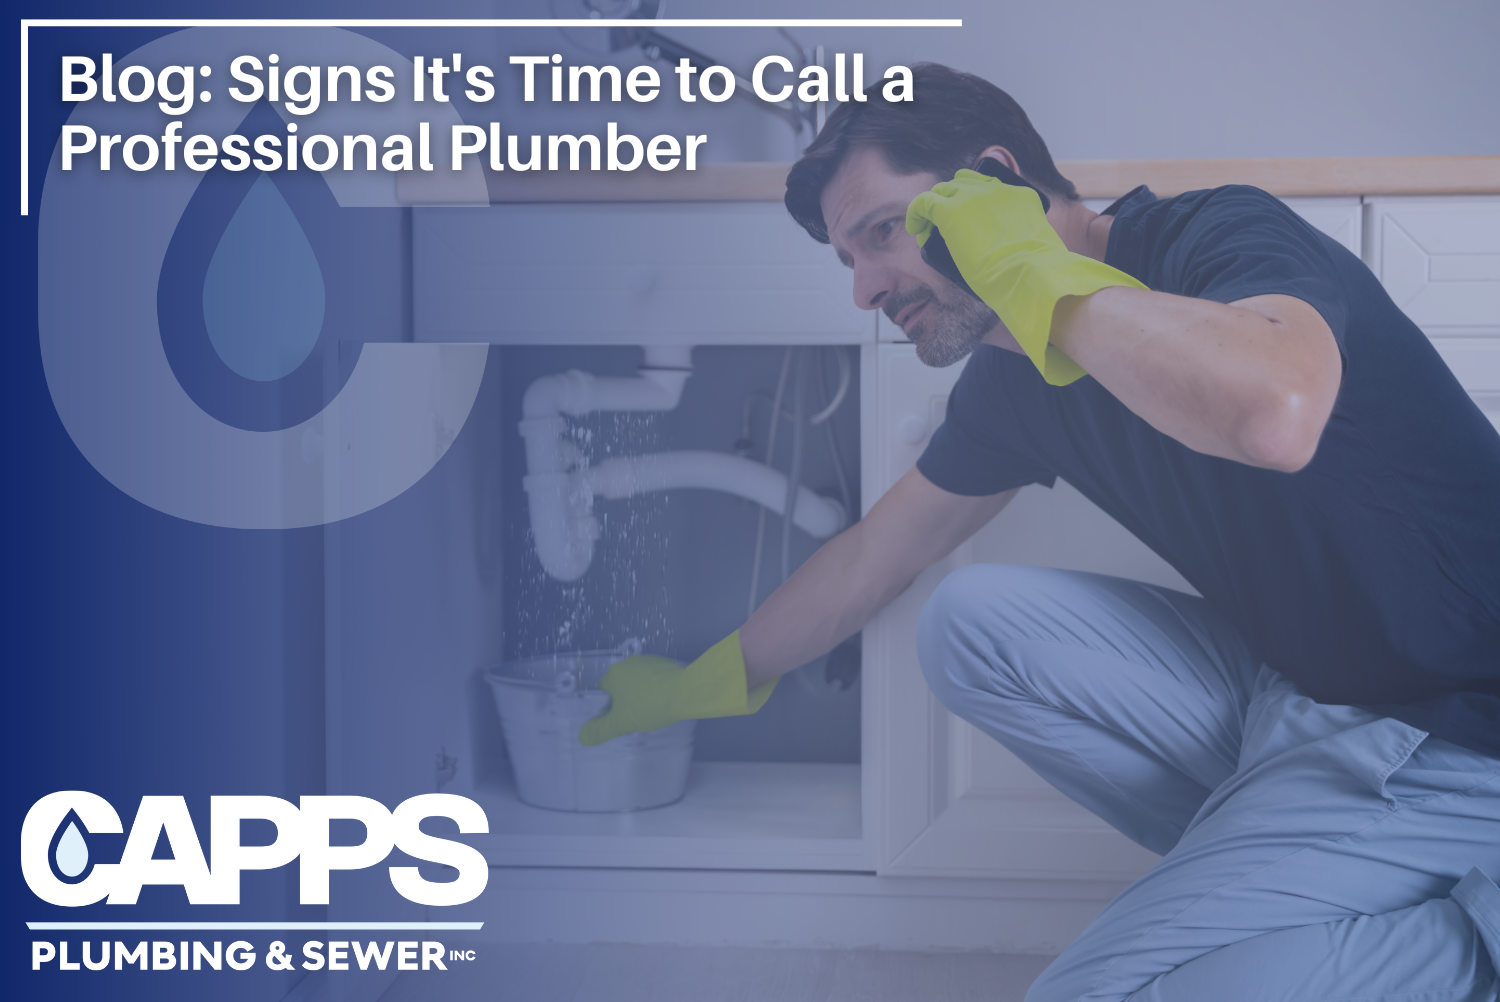 Six Signs You Need Professional Plumbing